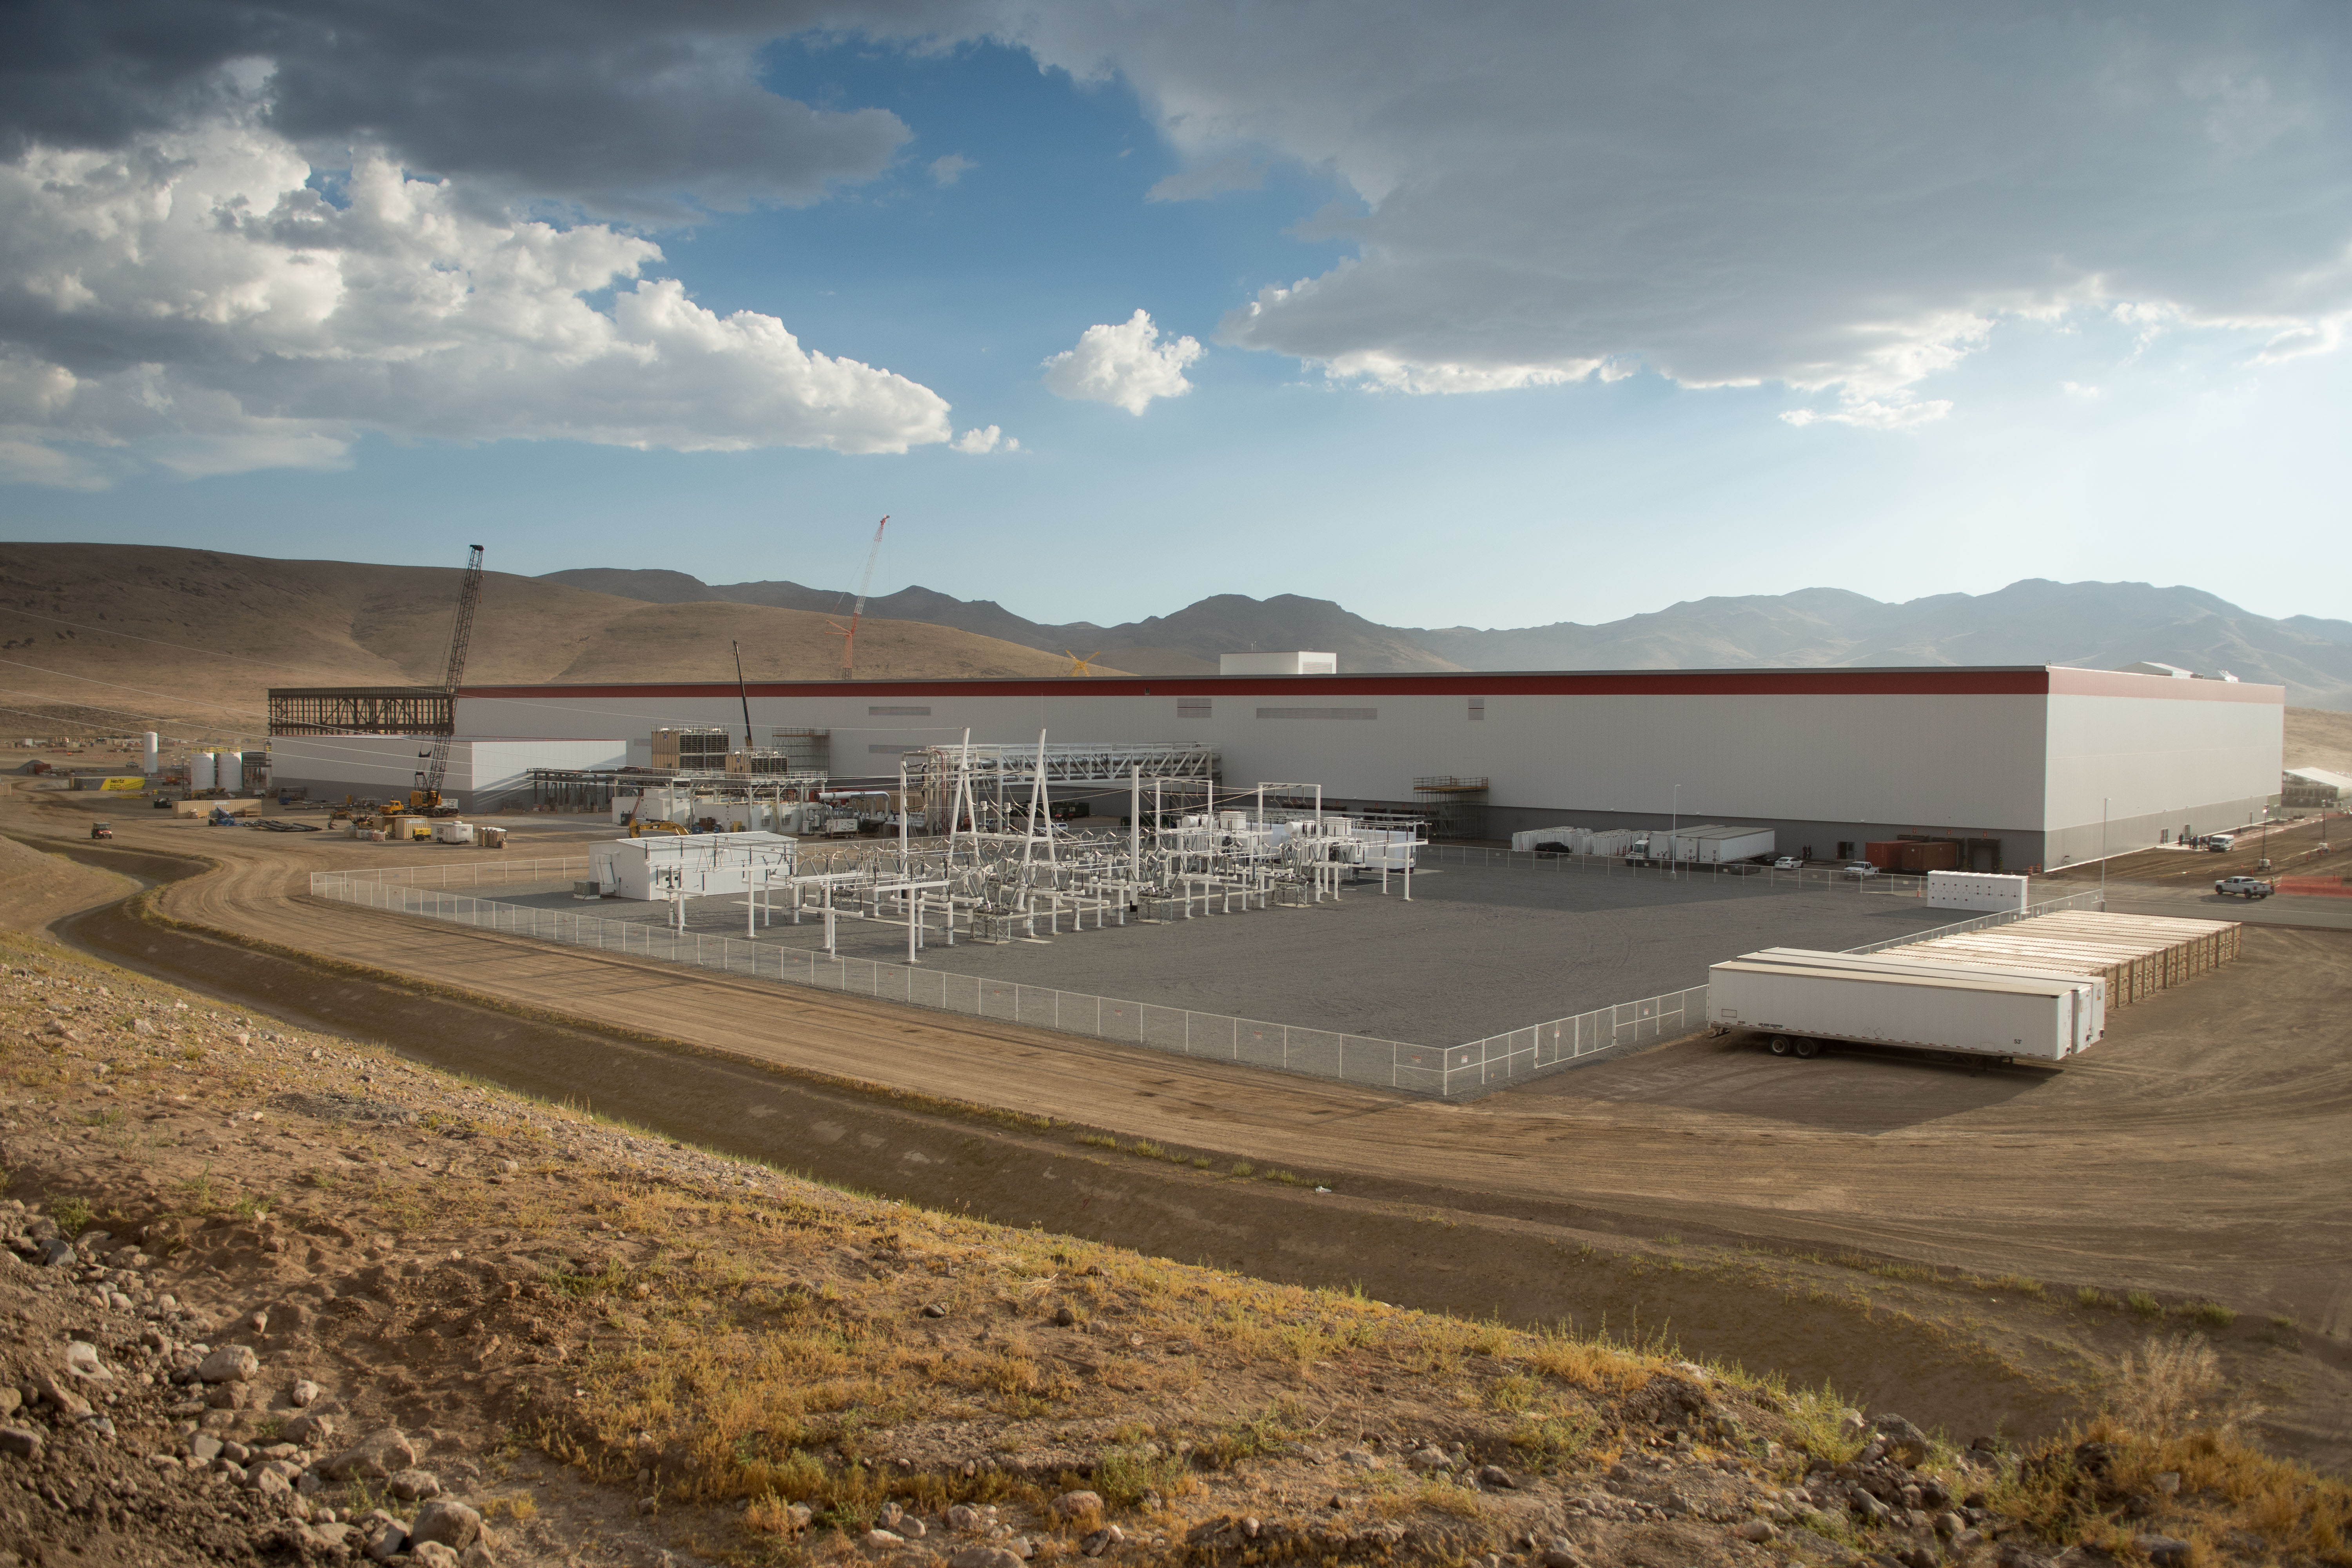 Tesla partner Panasonic is shutting down its operations at Nevada gigafactory